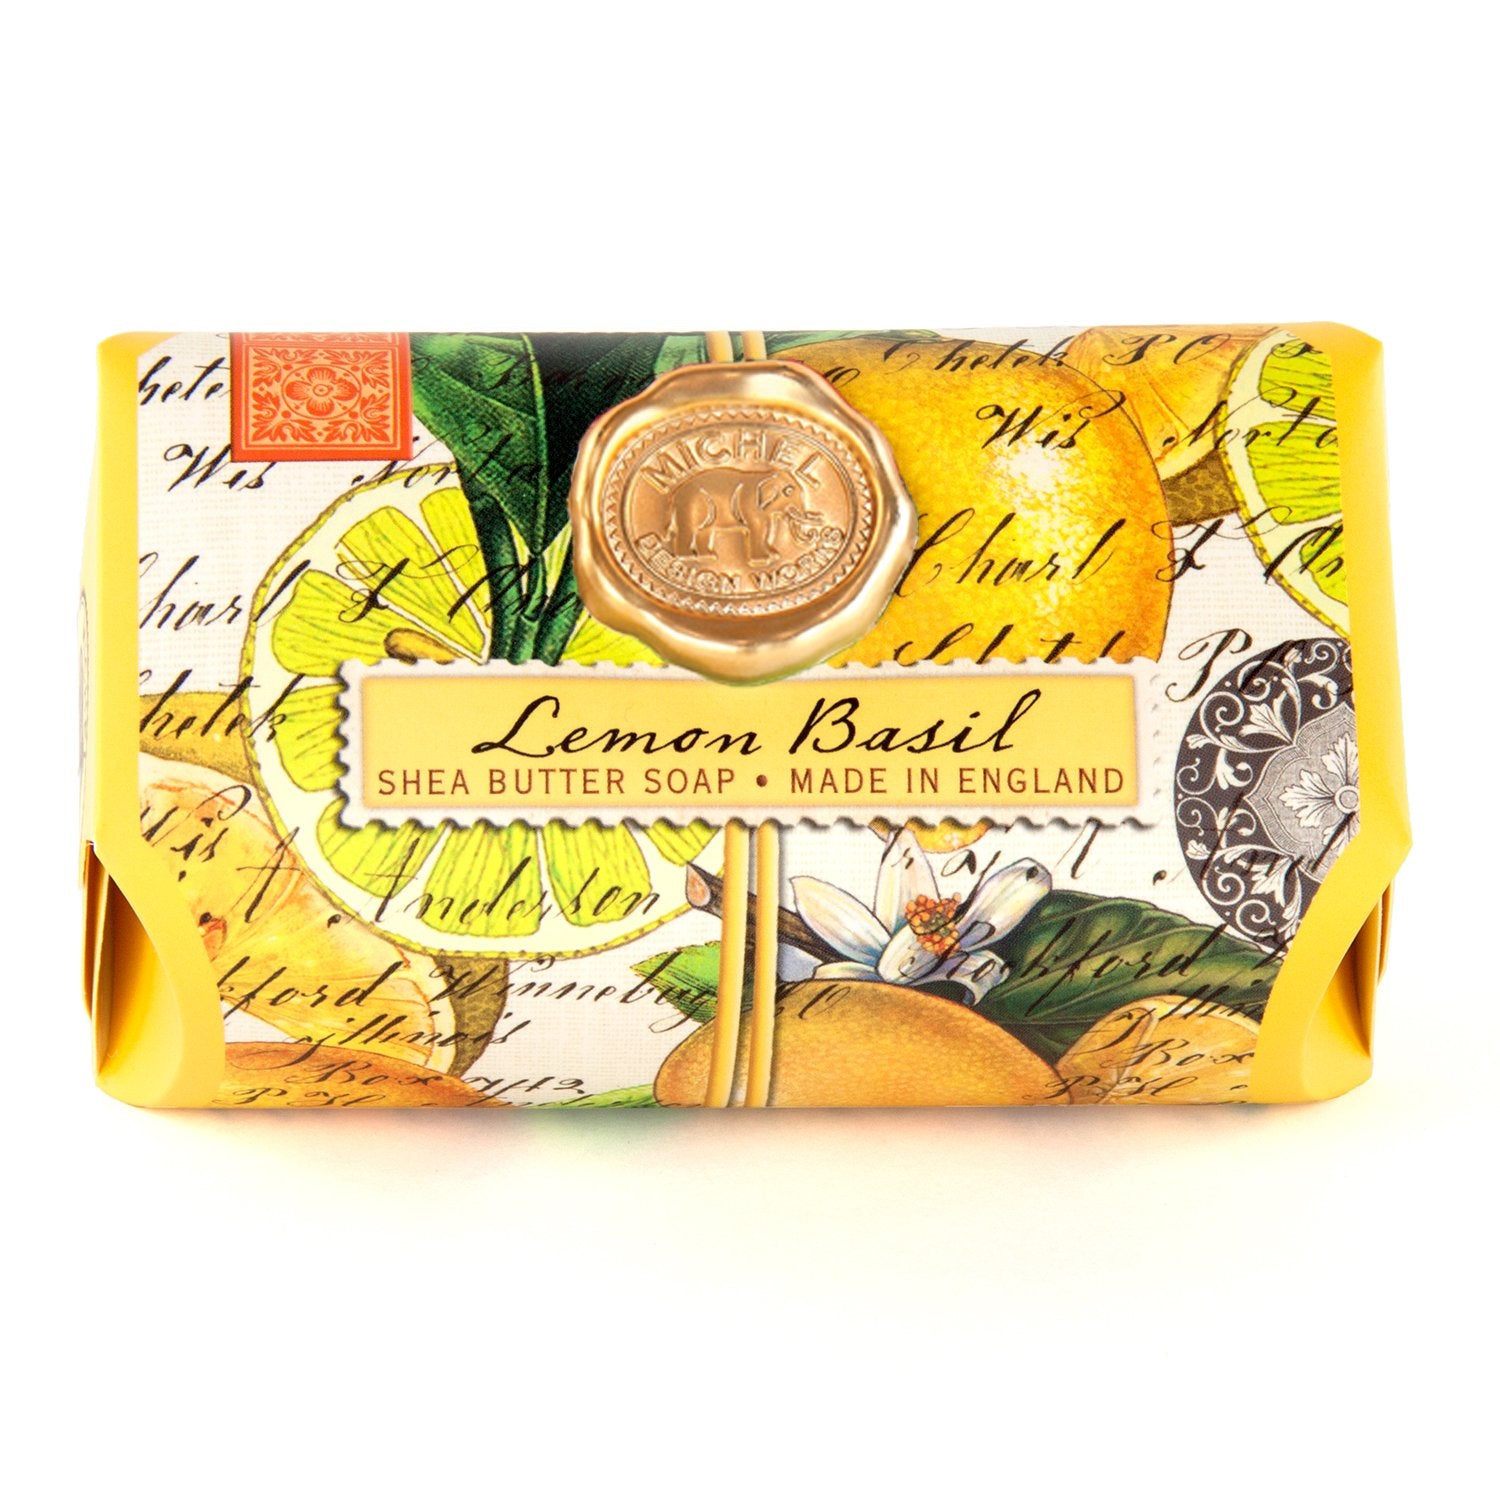 lemon basil shea butter bar soap in package on a white background